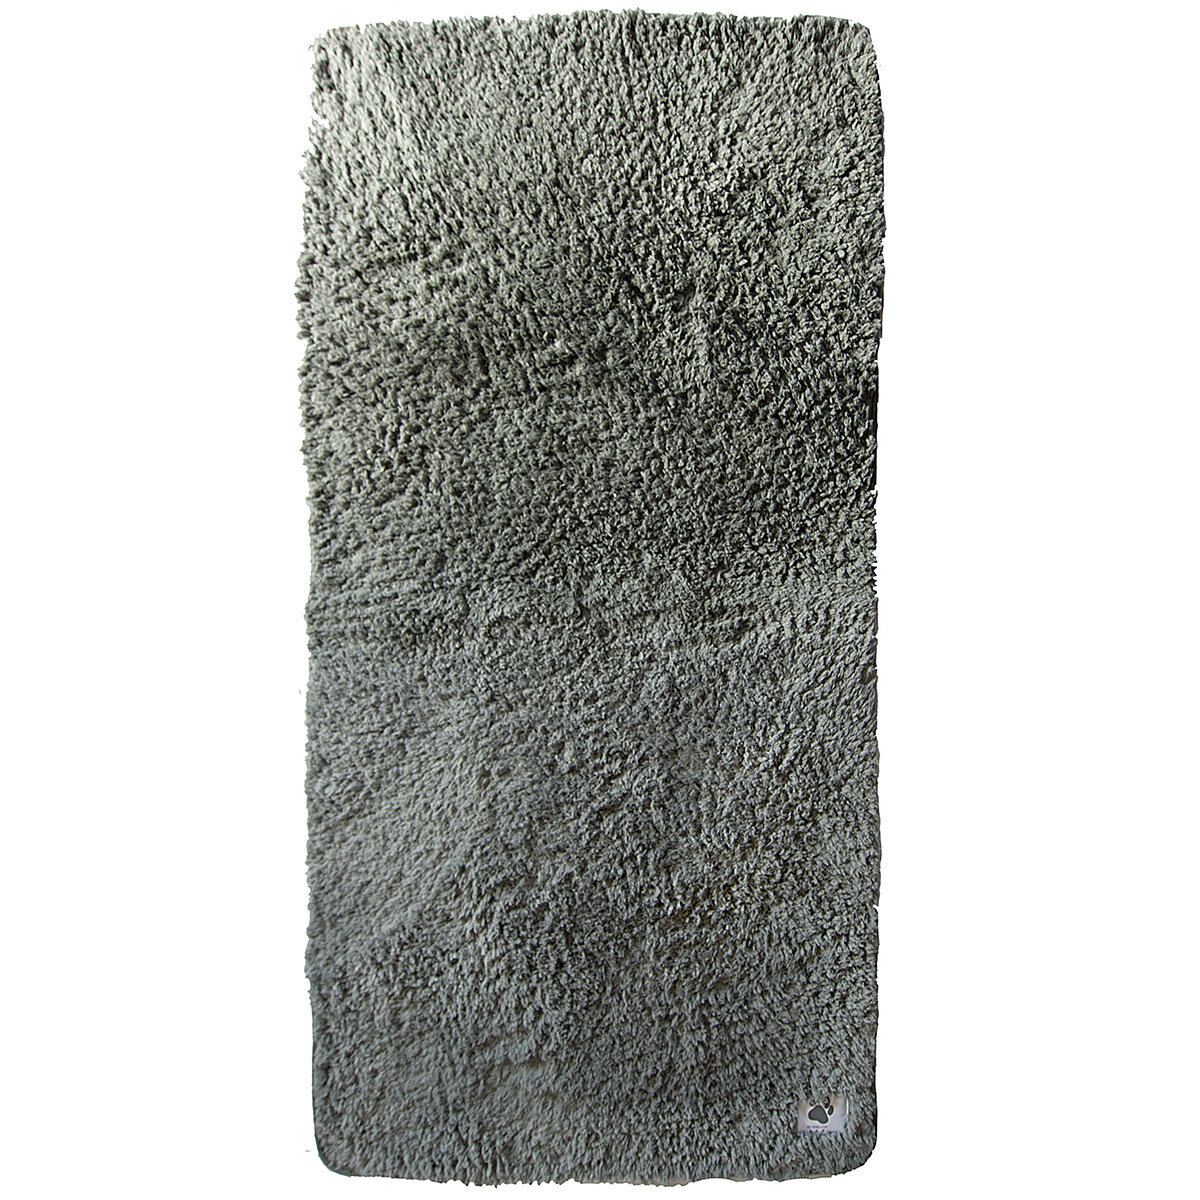 Pet Rebellion Comfy Cover in Grey, 100cm x 170cm